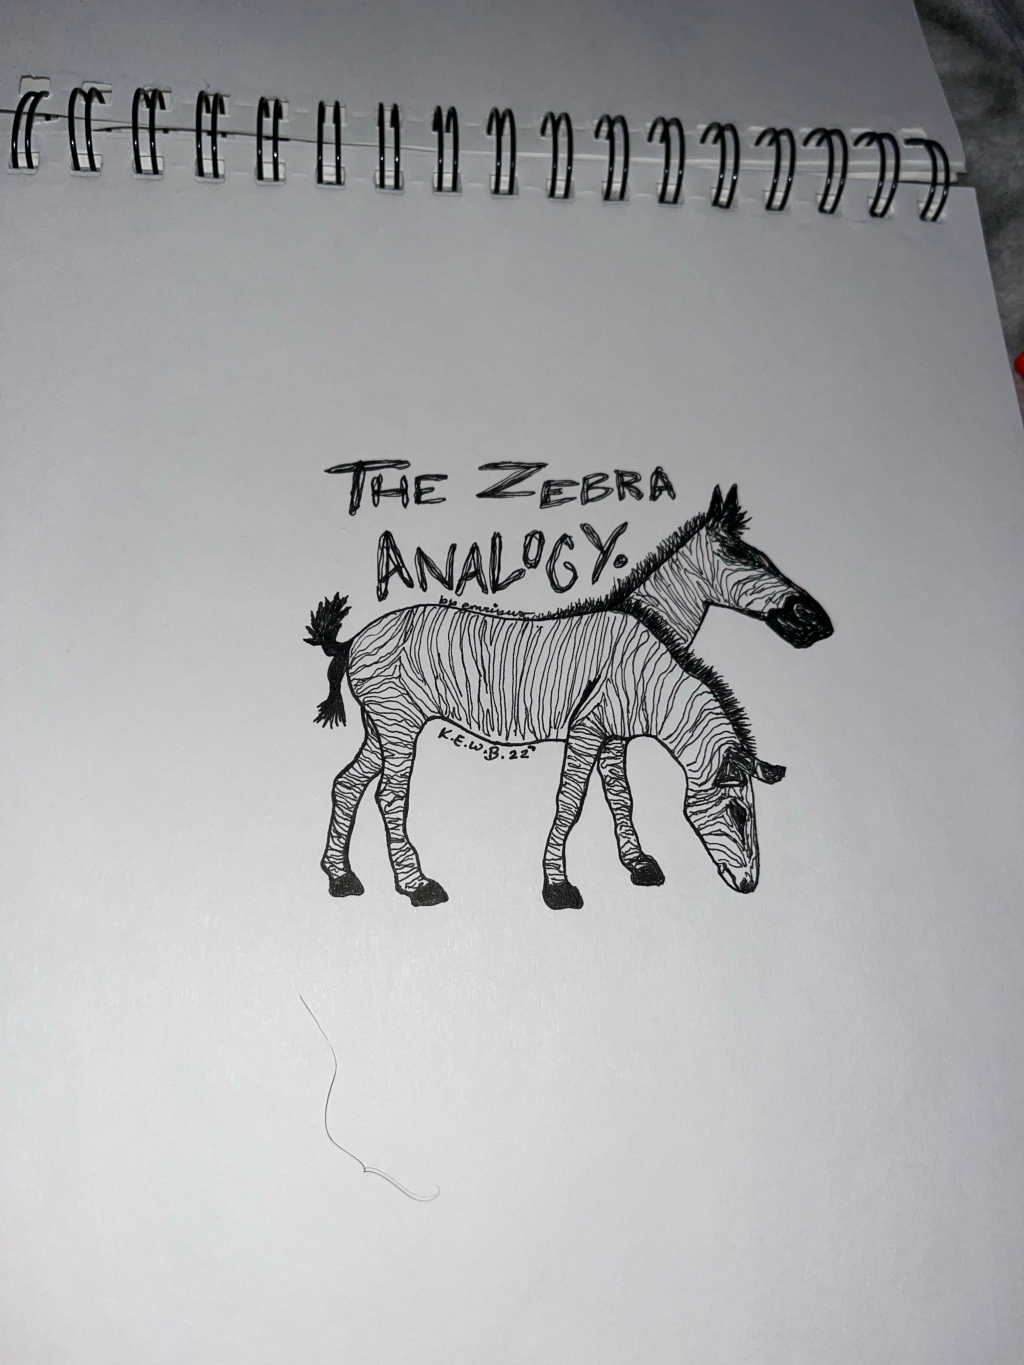 The Zebra Analogy